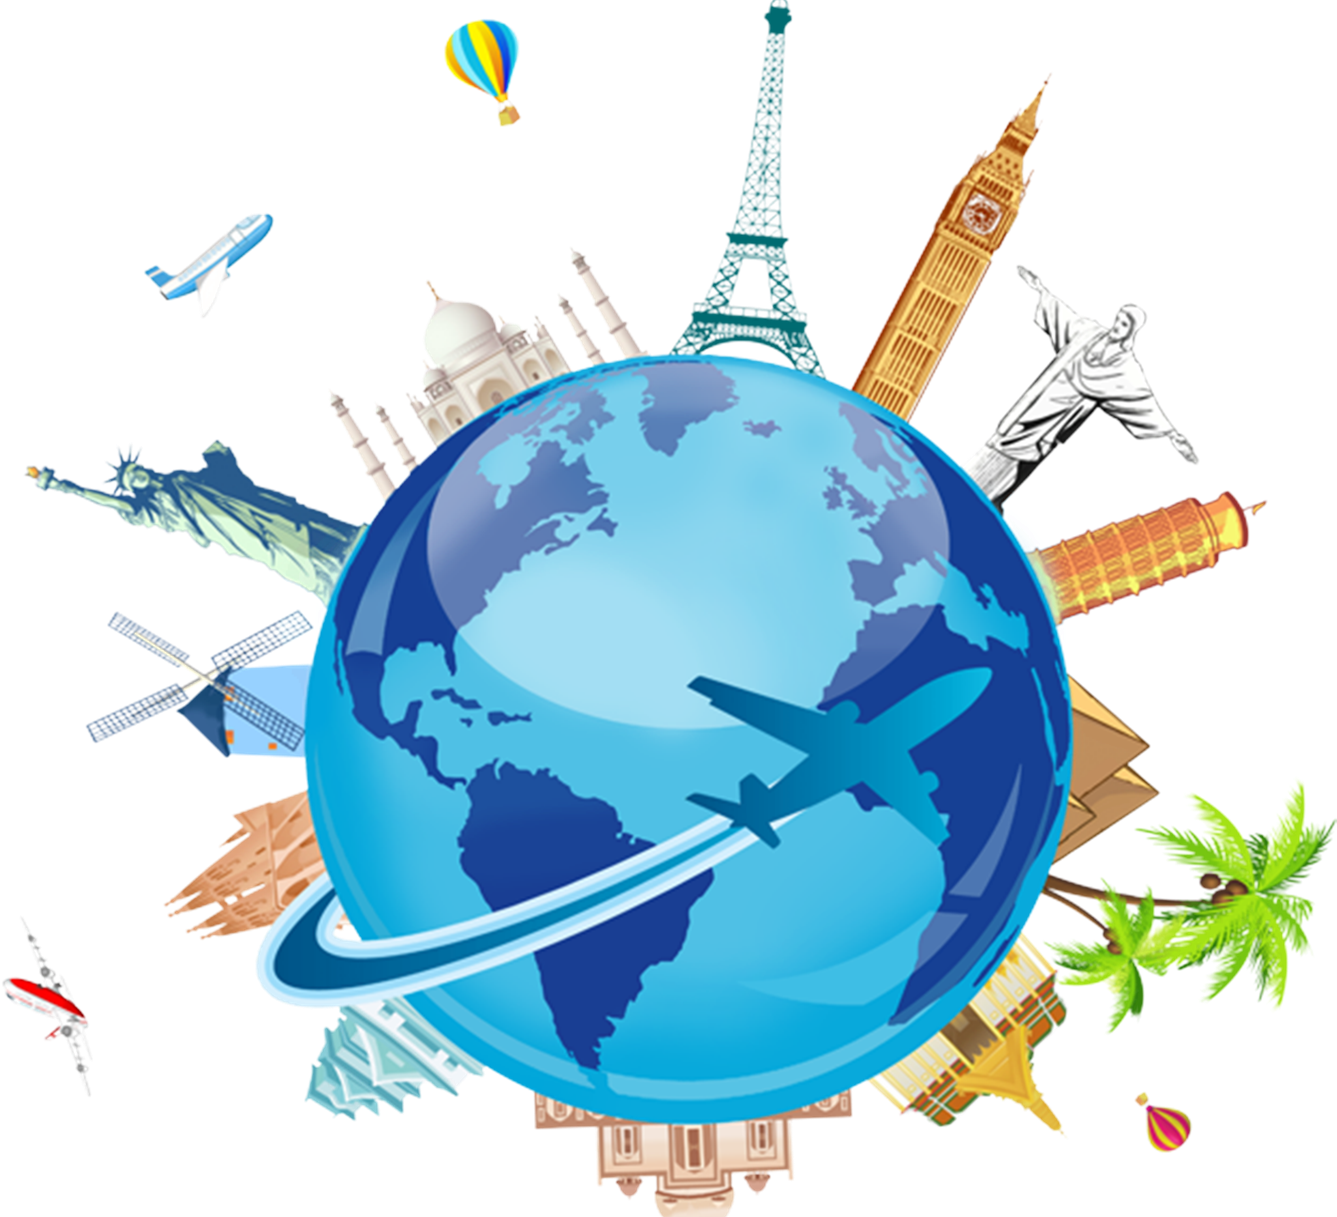 Globe depicting travel methods and destinations